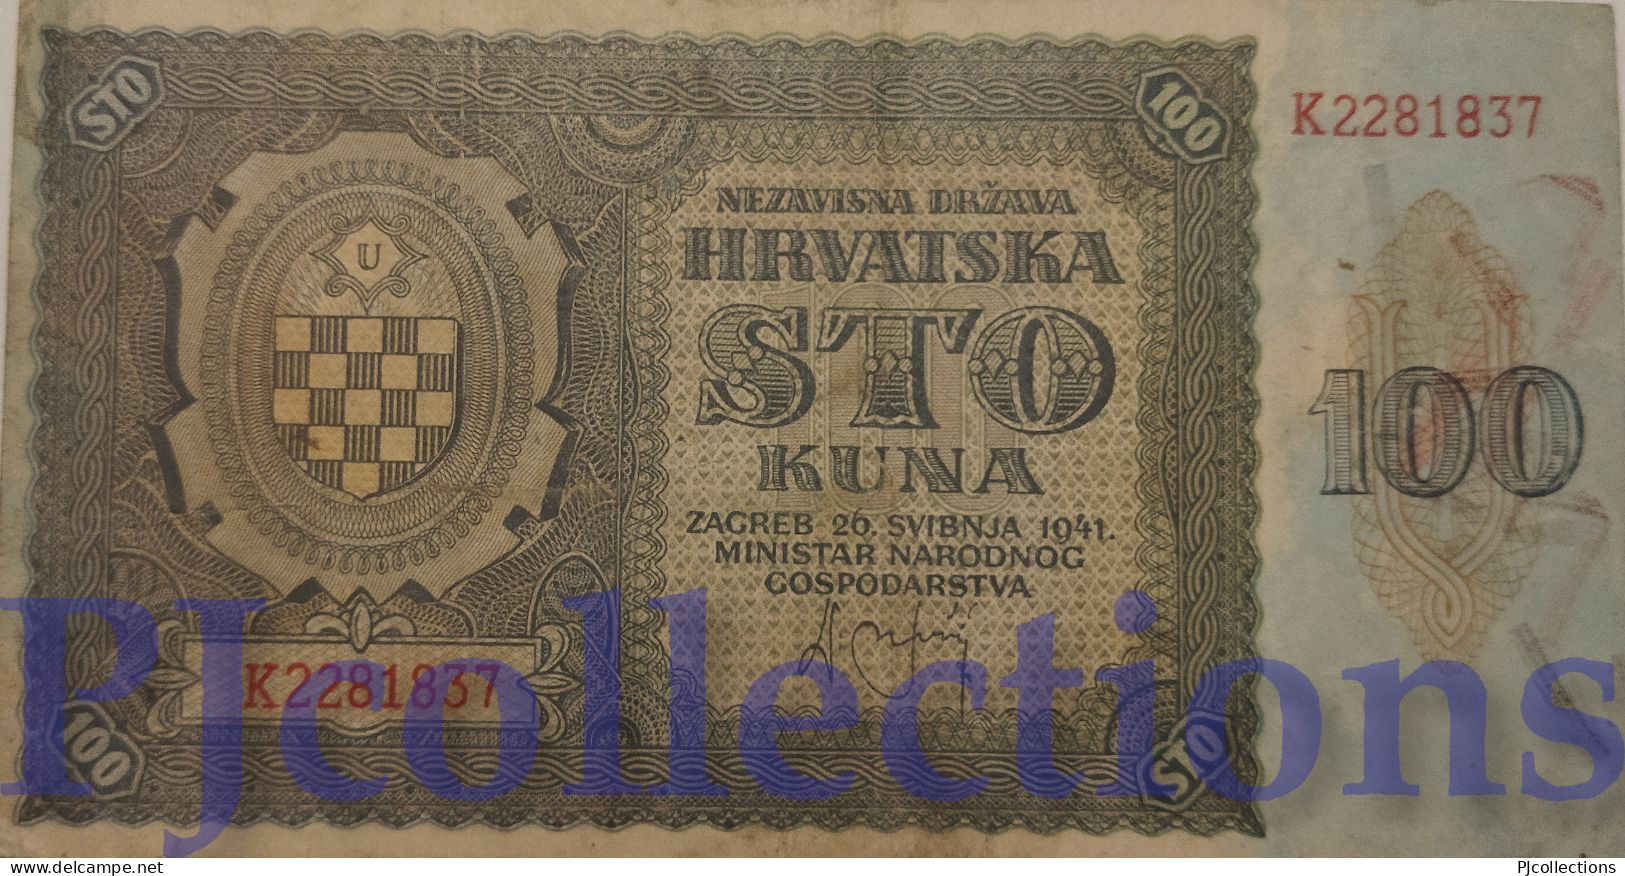 CROATIA 100 KUNA 1941 PICK 2a VF - Croatia